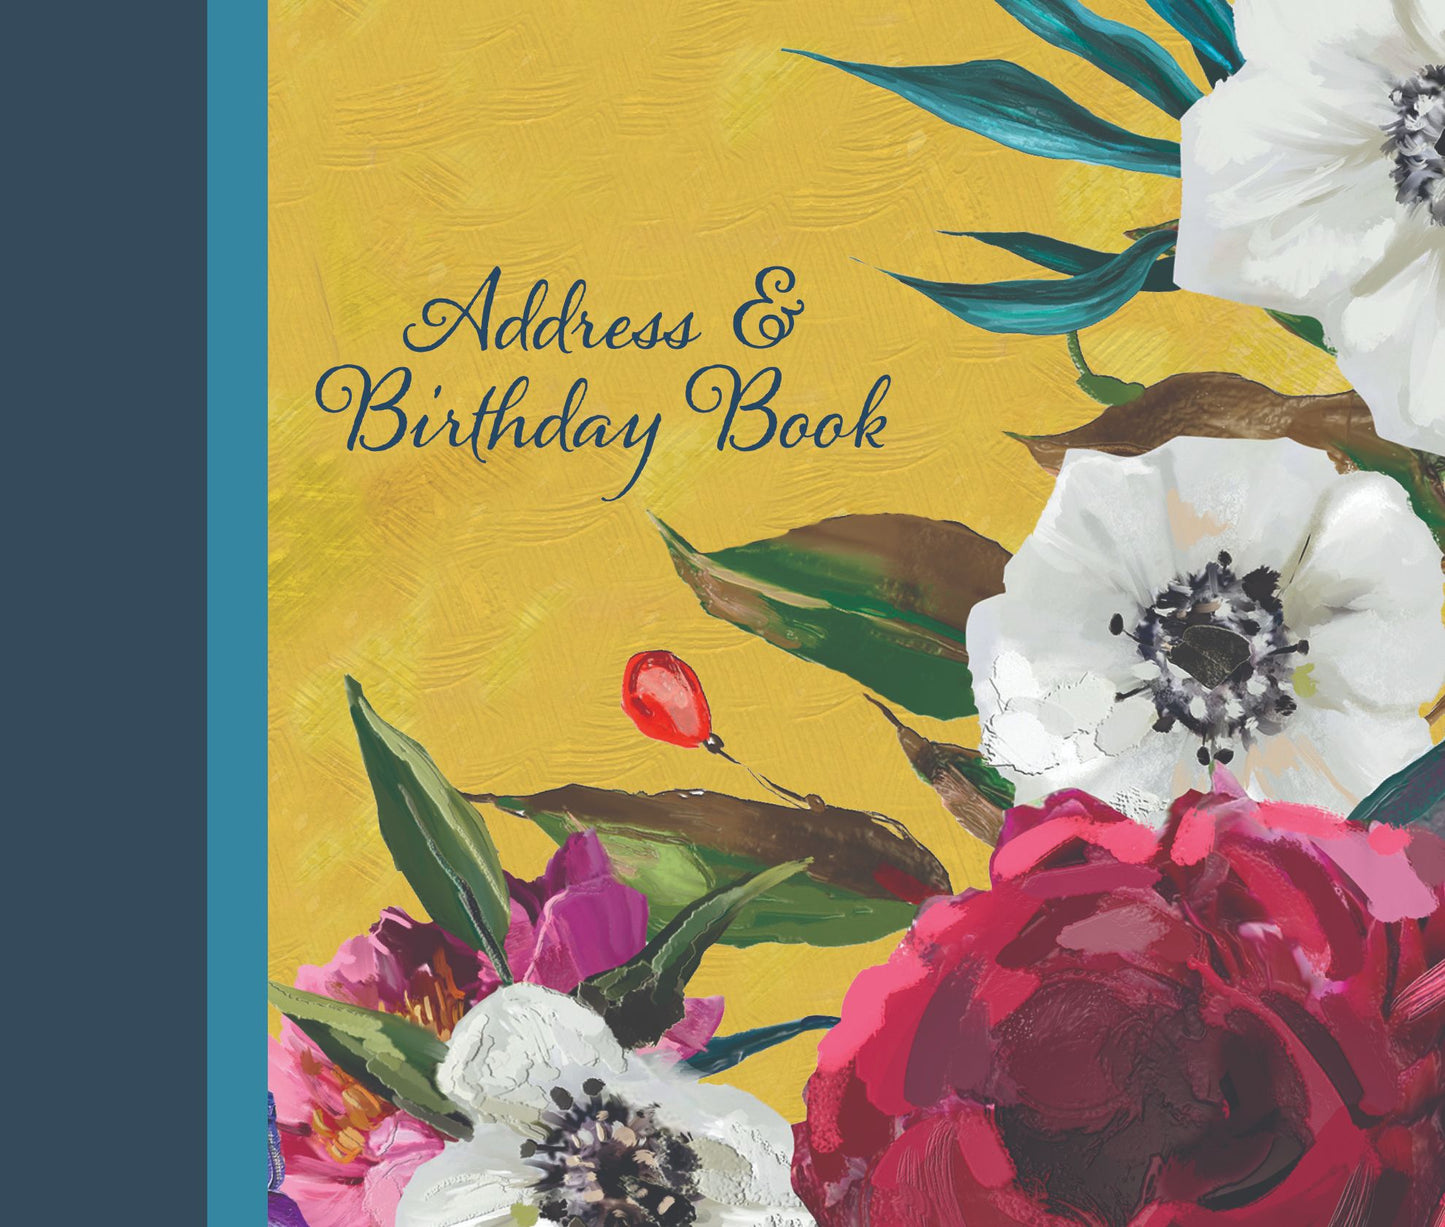 Gifted Stationery Floral Flourish Address & Birthday Book